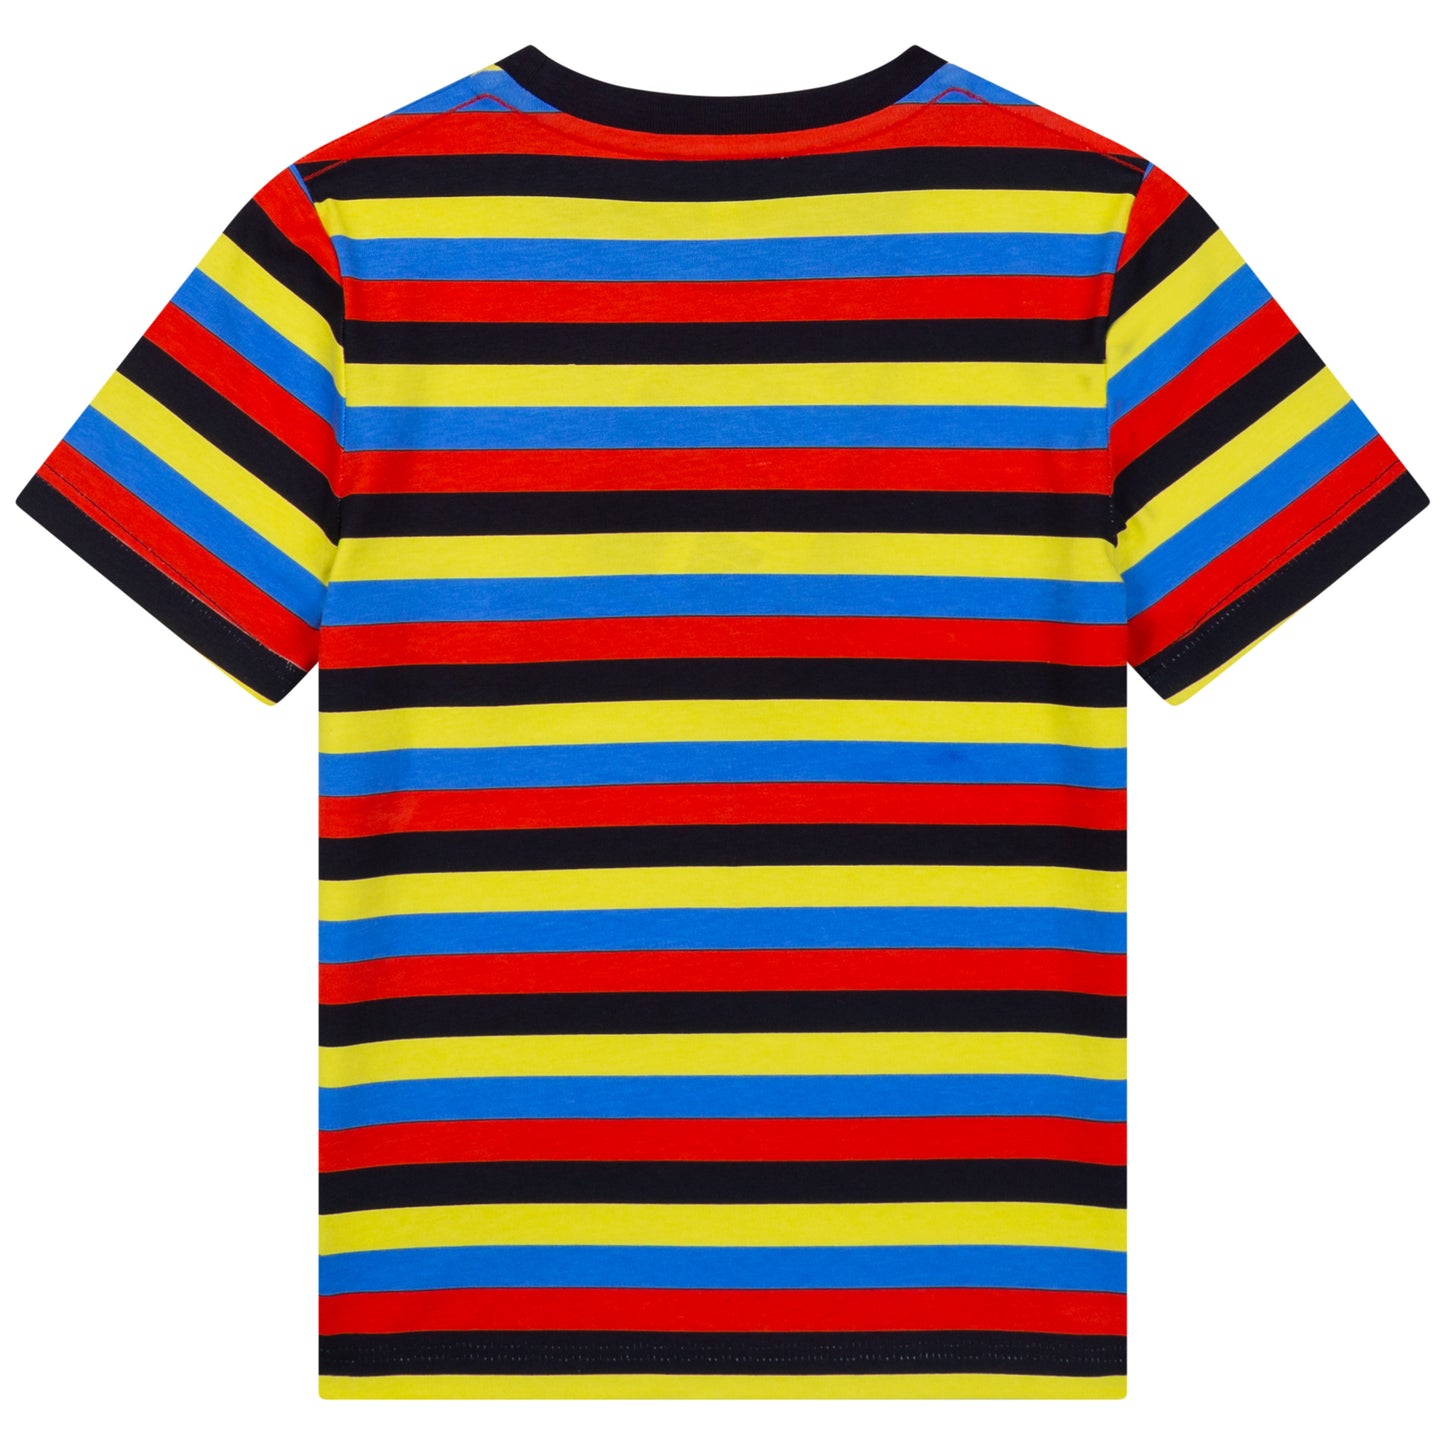 The Marc Jacobs Boys Striped T-Shirt